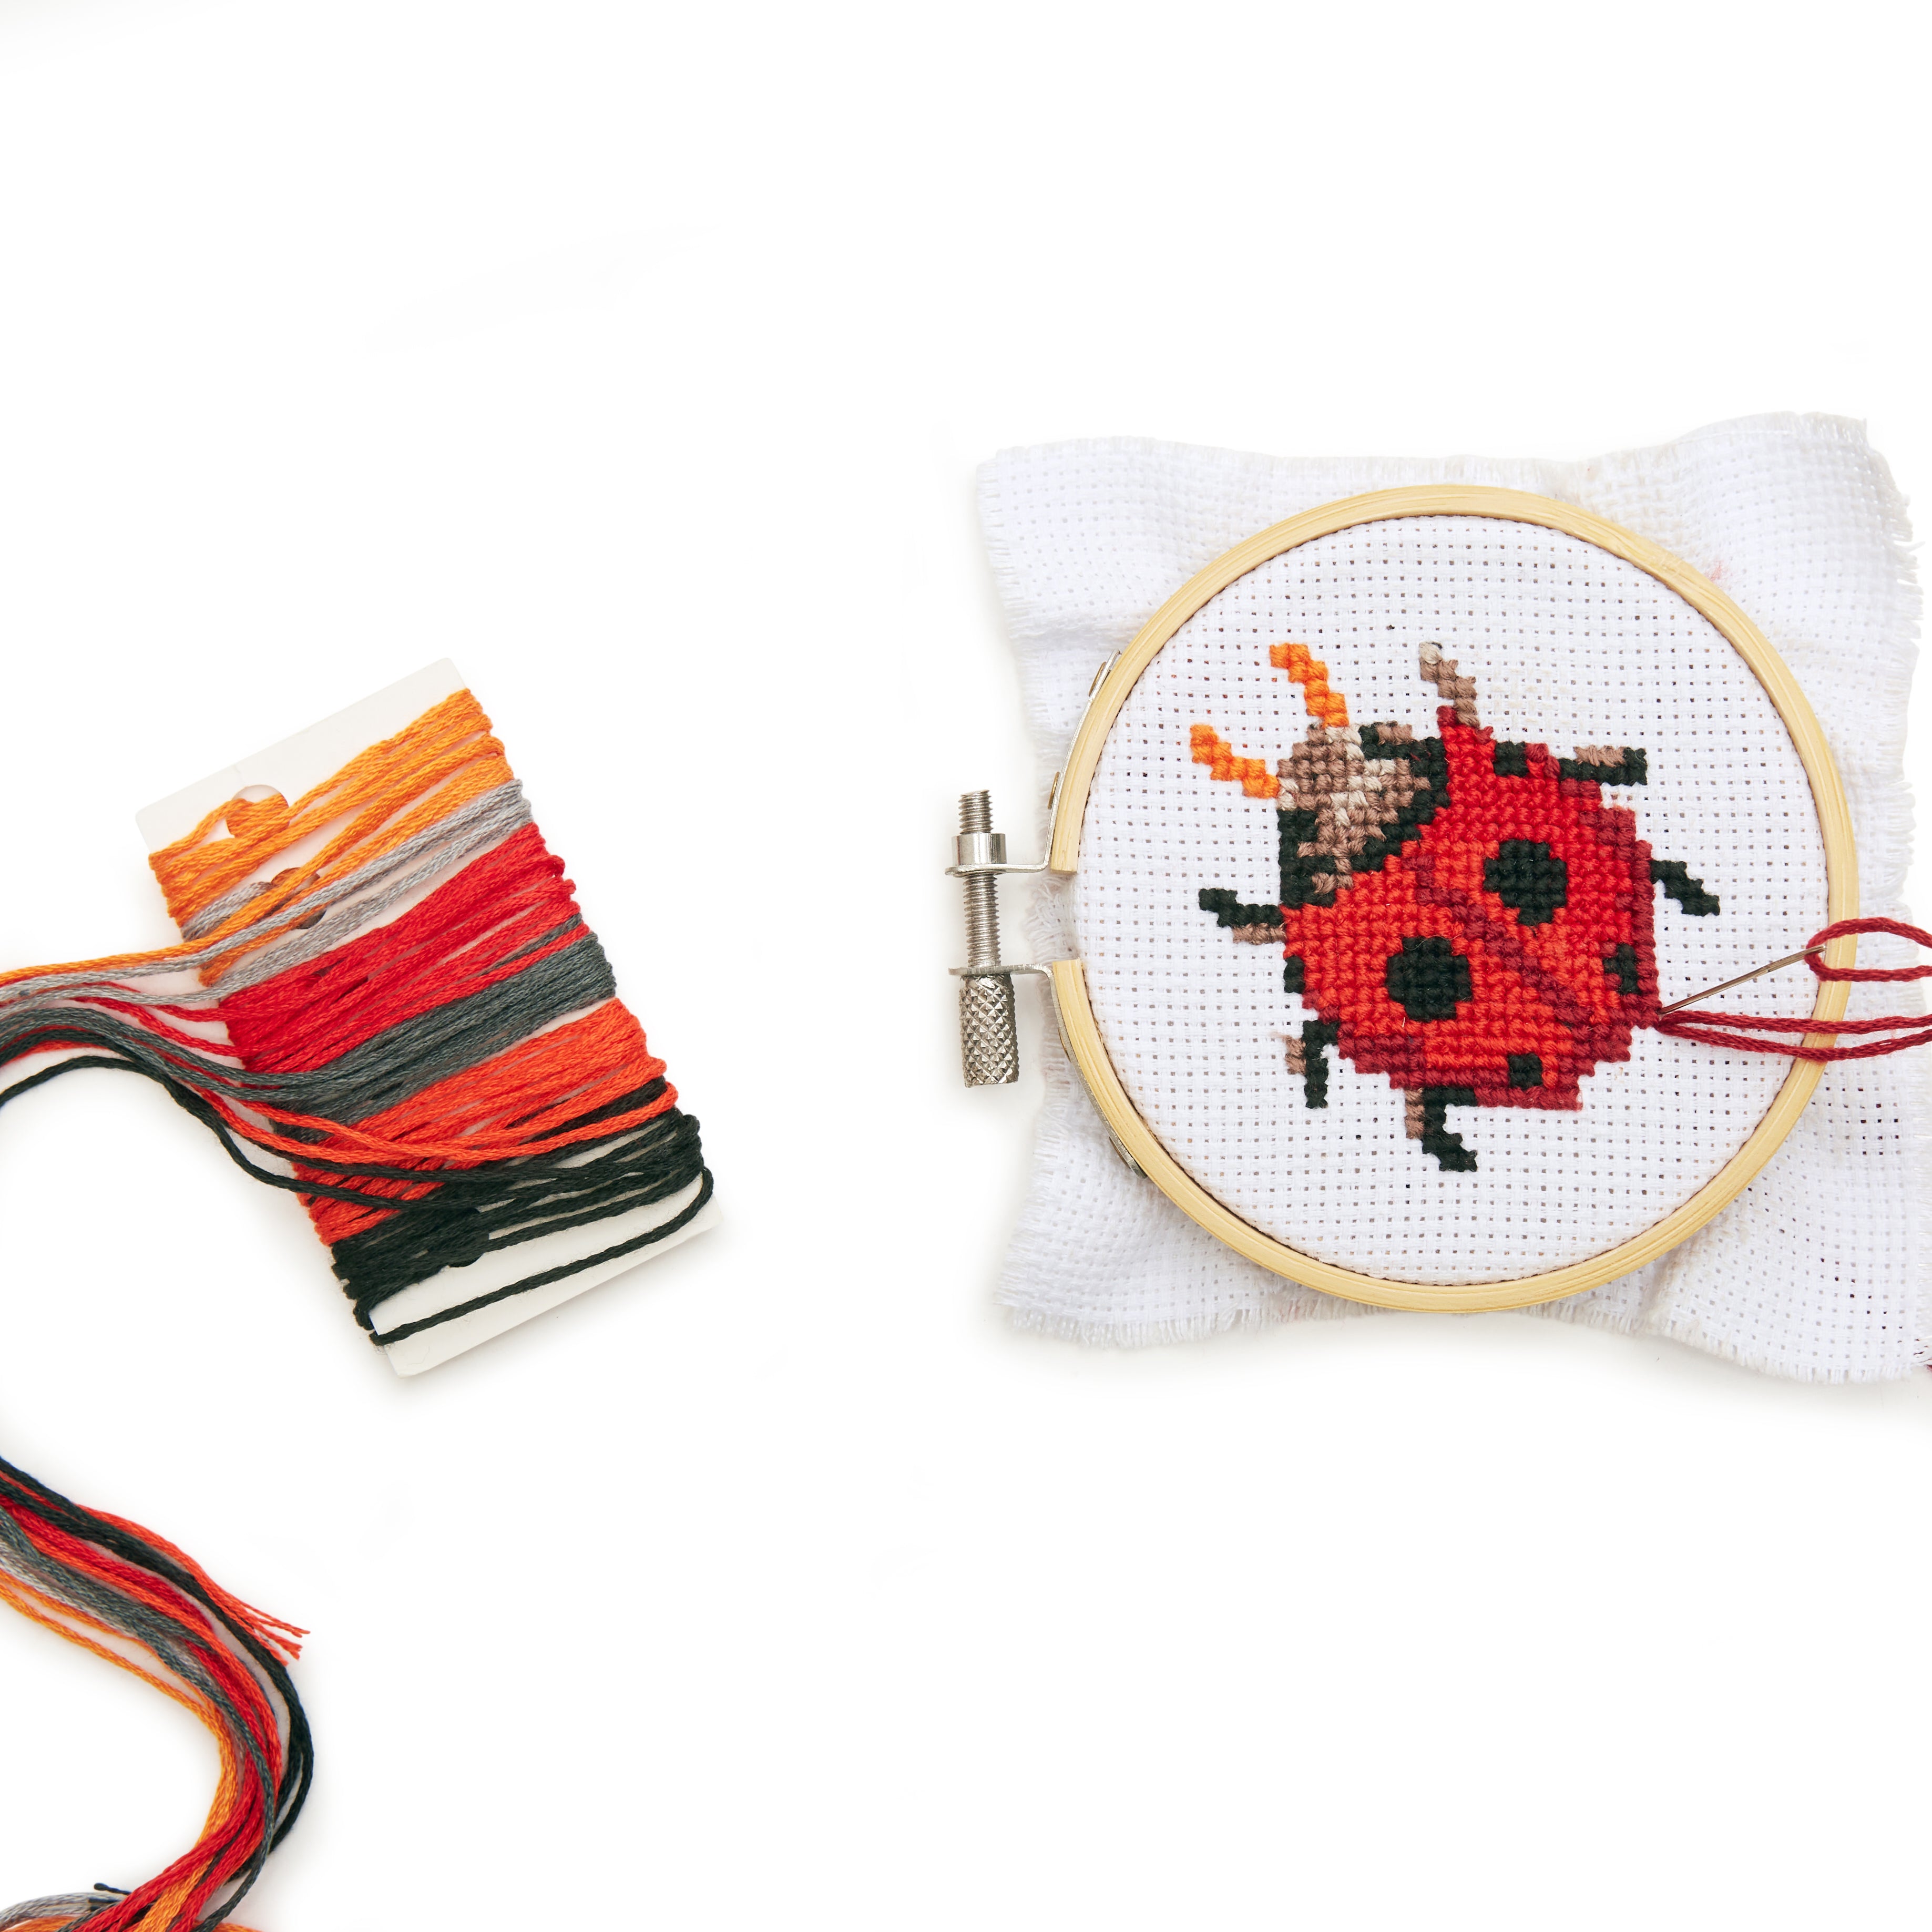 Fireworks Gallery  KIKKERLAND DESIGN Mini Cross Stitch Embroidery Kit: Cat